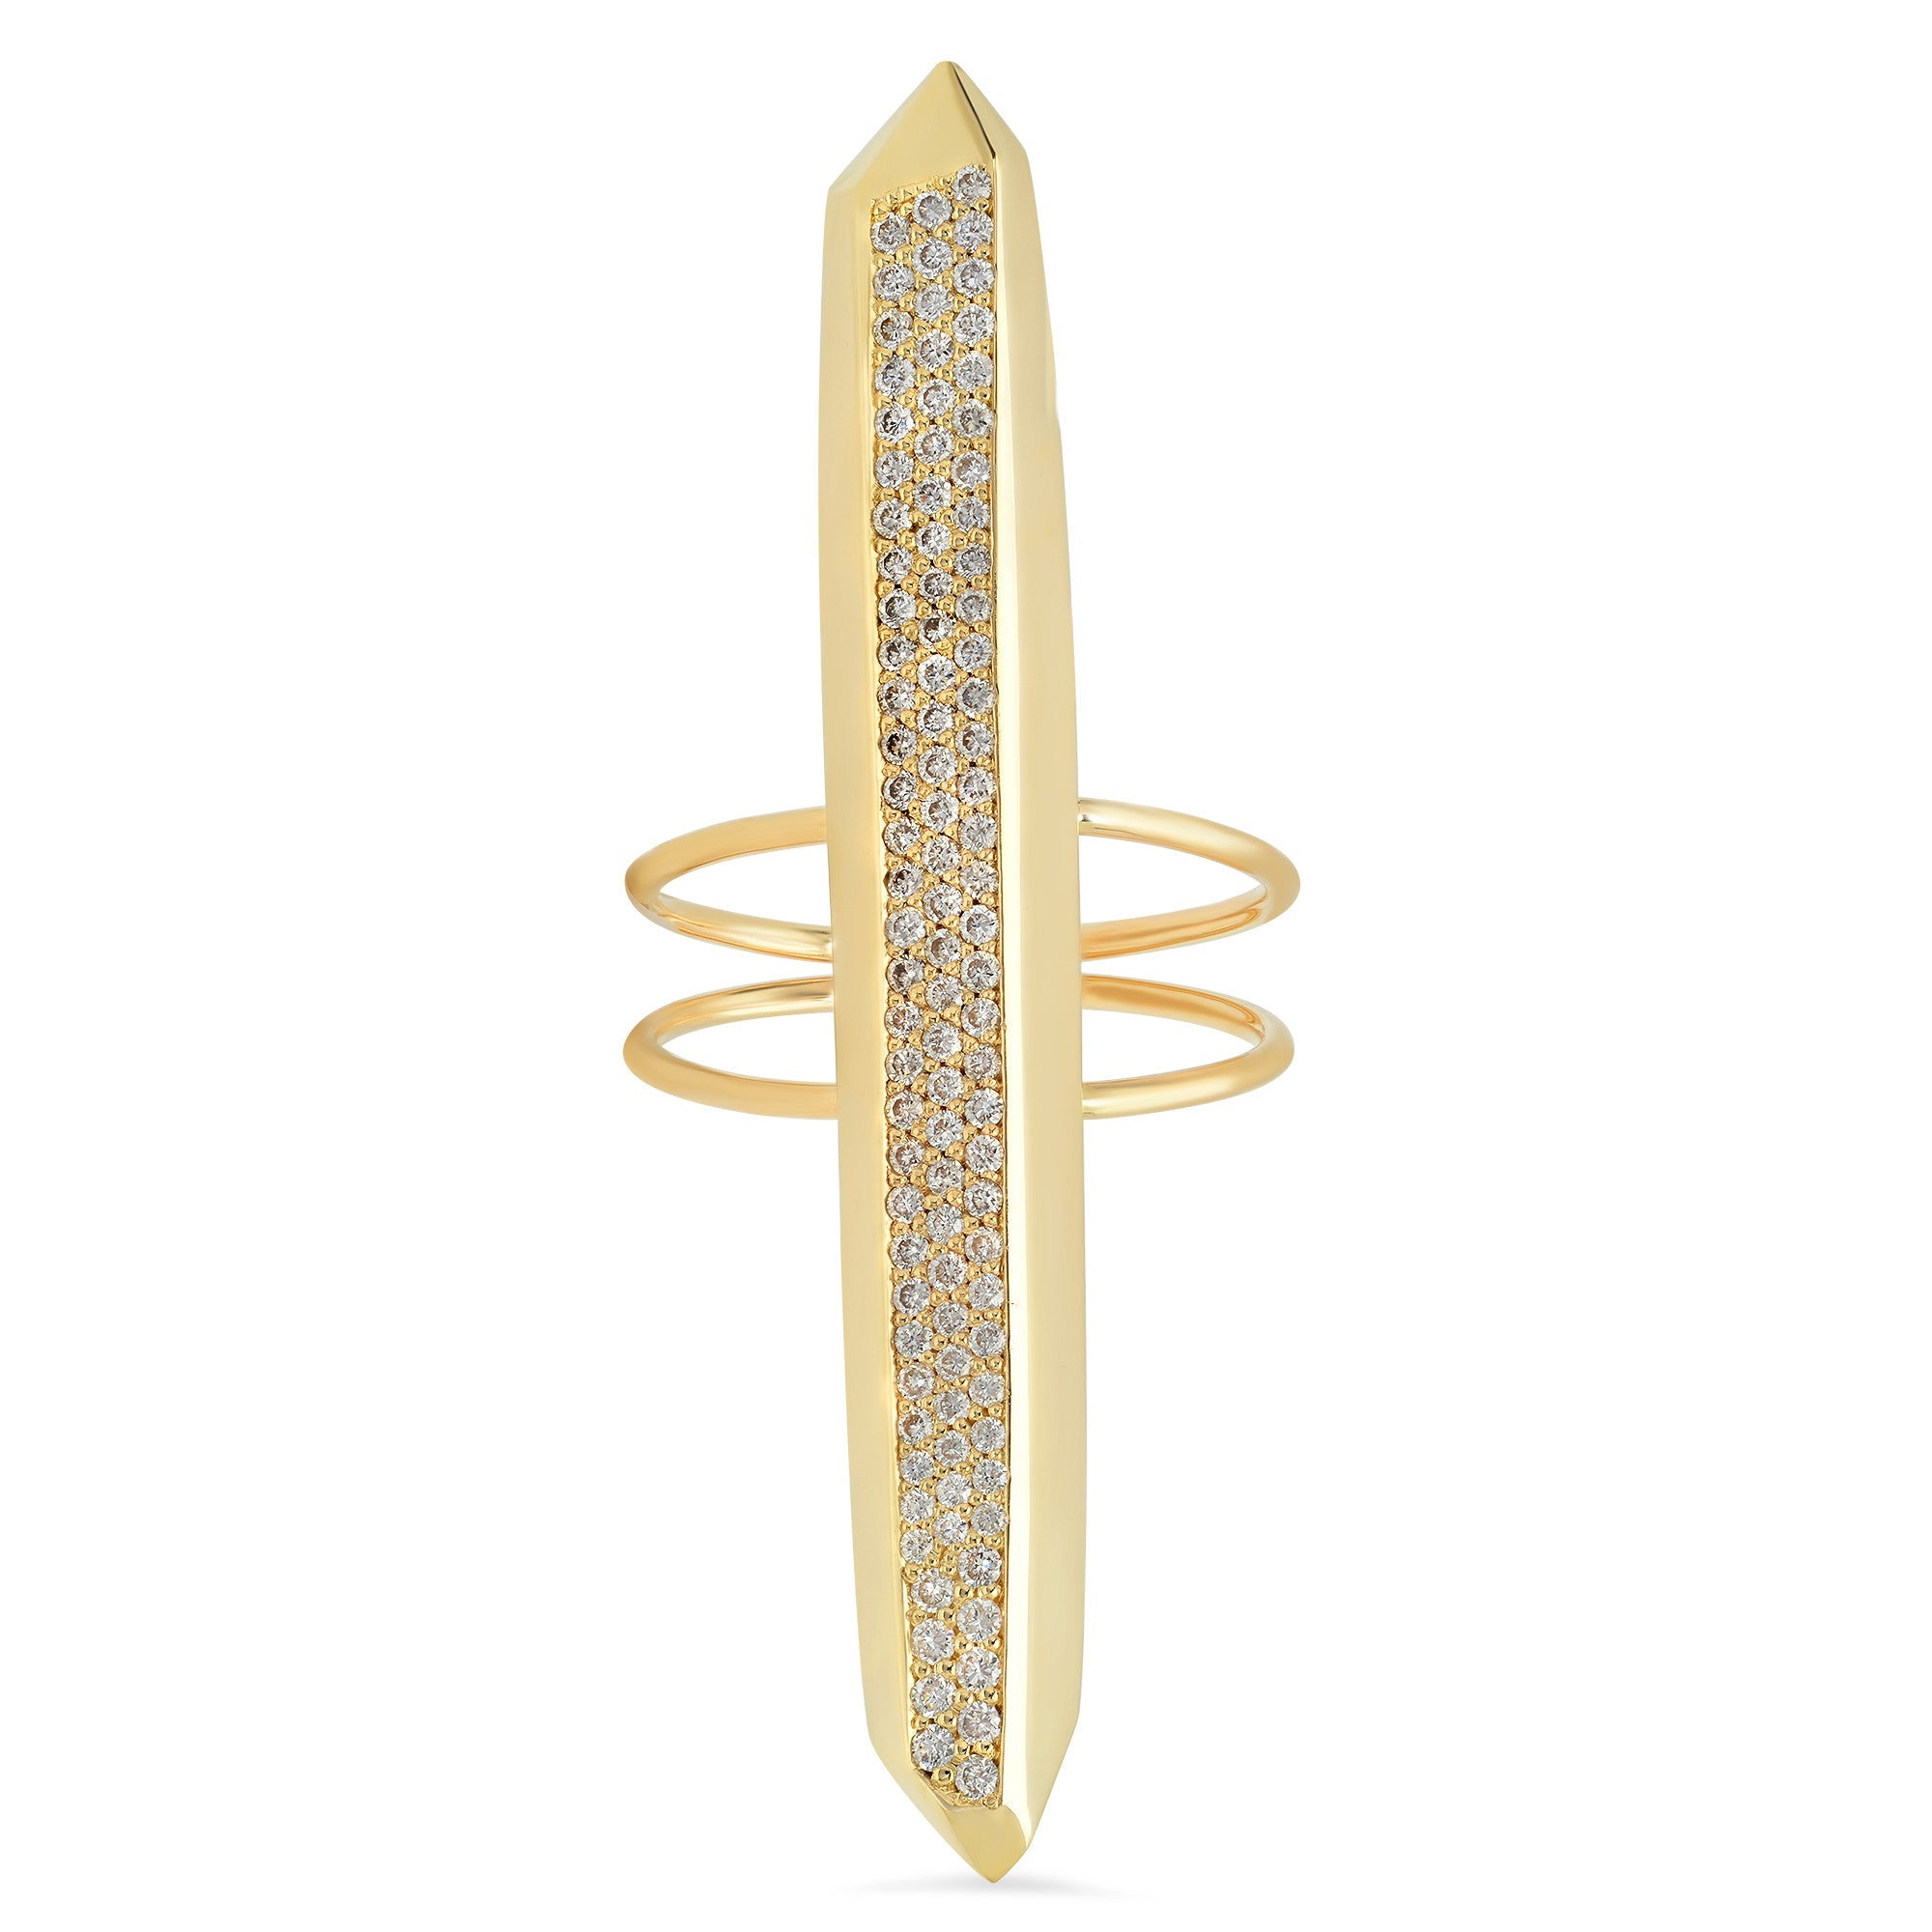 Diamond Crystalline Ring Statement Elisabeth Bell Jewelry 5 Yellow Gold 